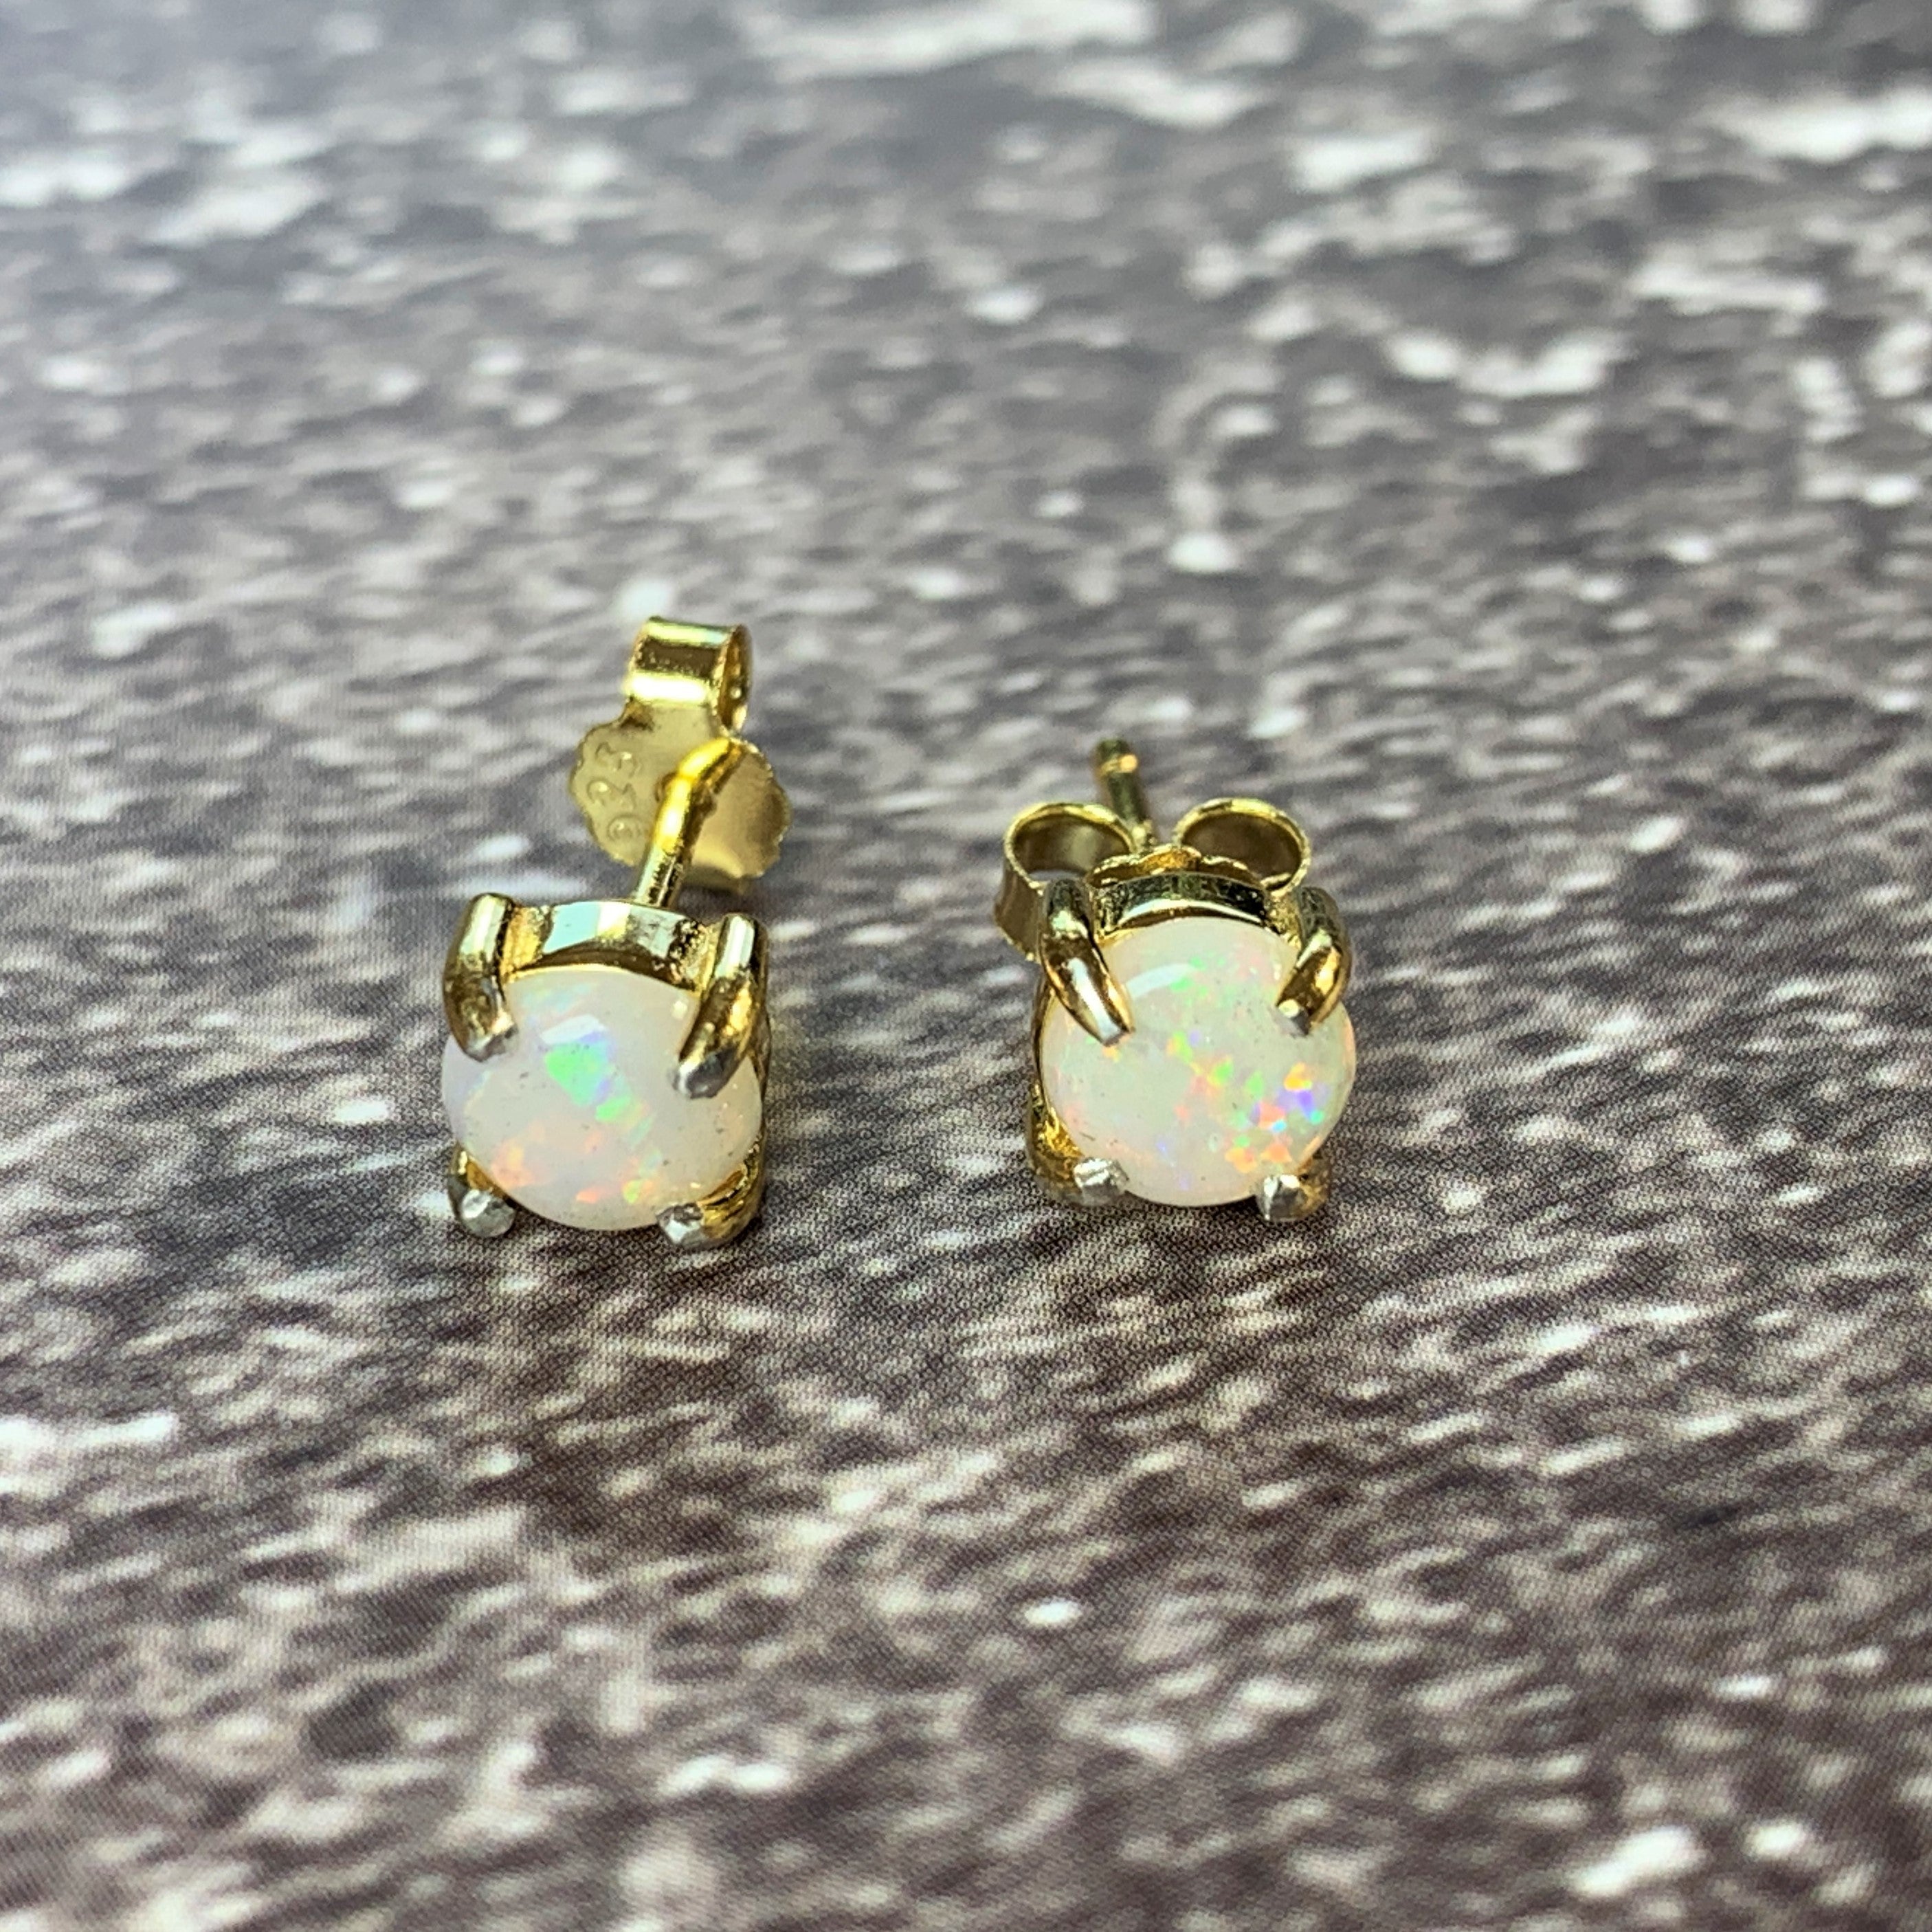 5mm Round White Opal Yellow Gold plated studs claw set - Masterpiece Jewellery Opal & Gems Sydney Australia | Online Shop